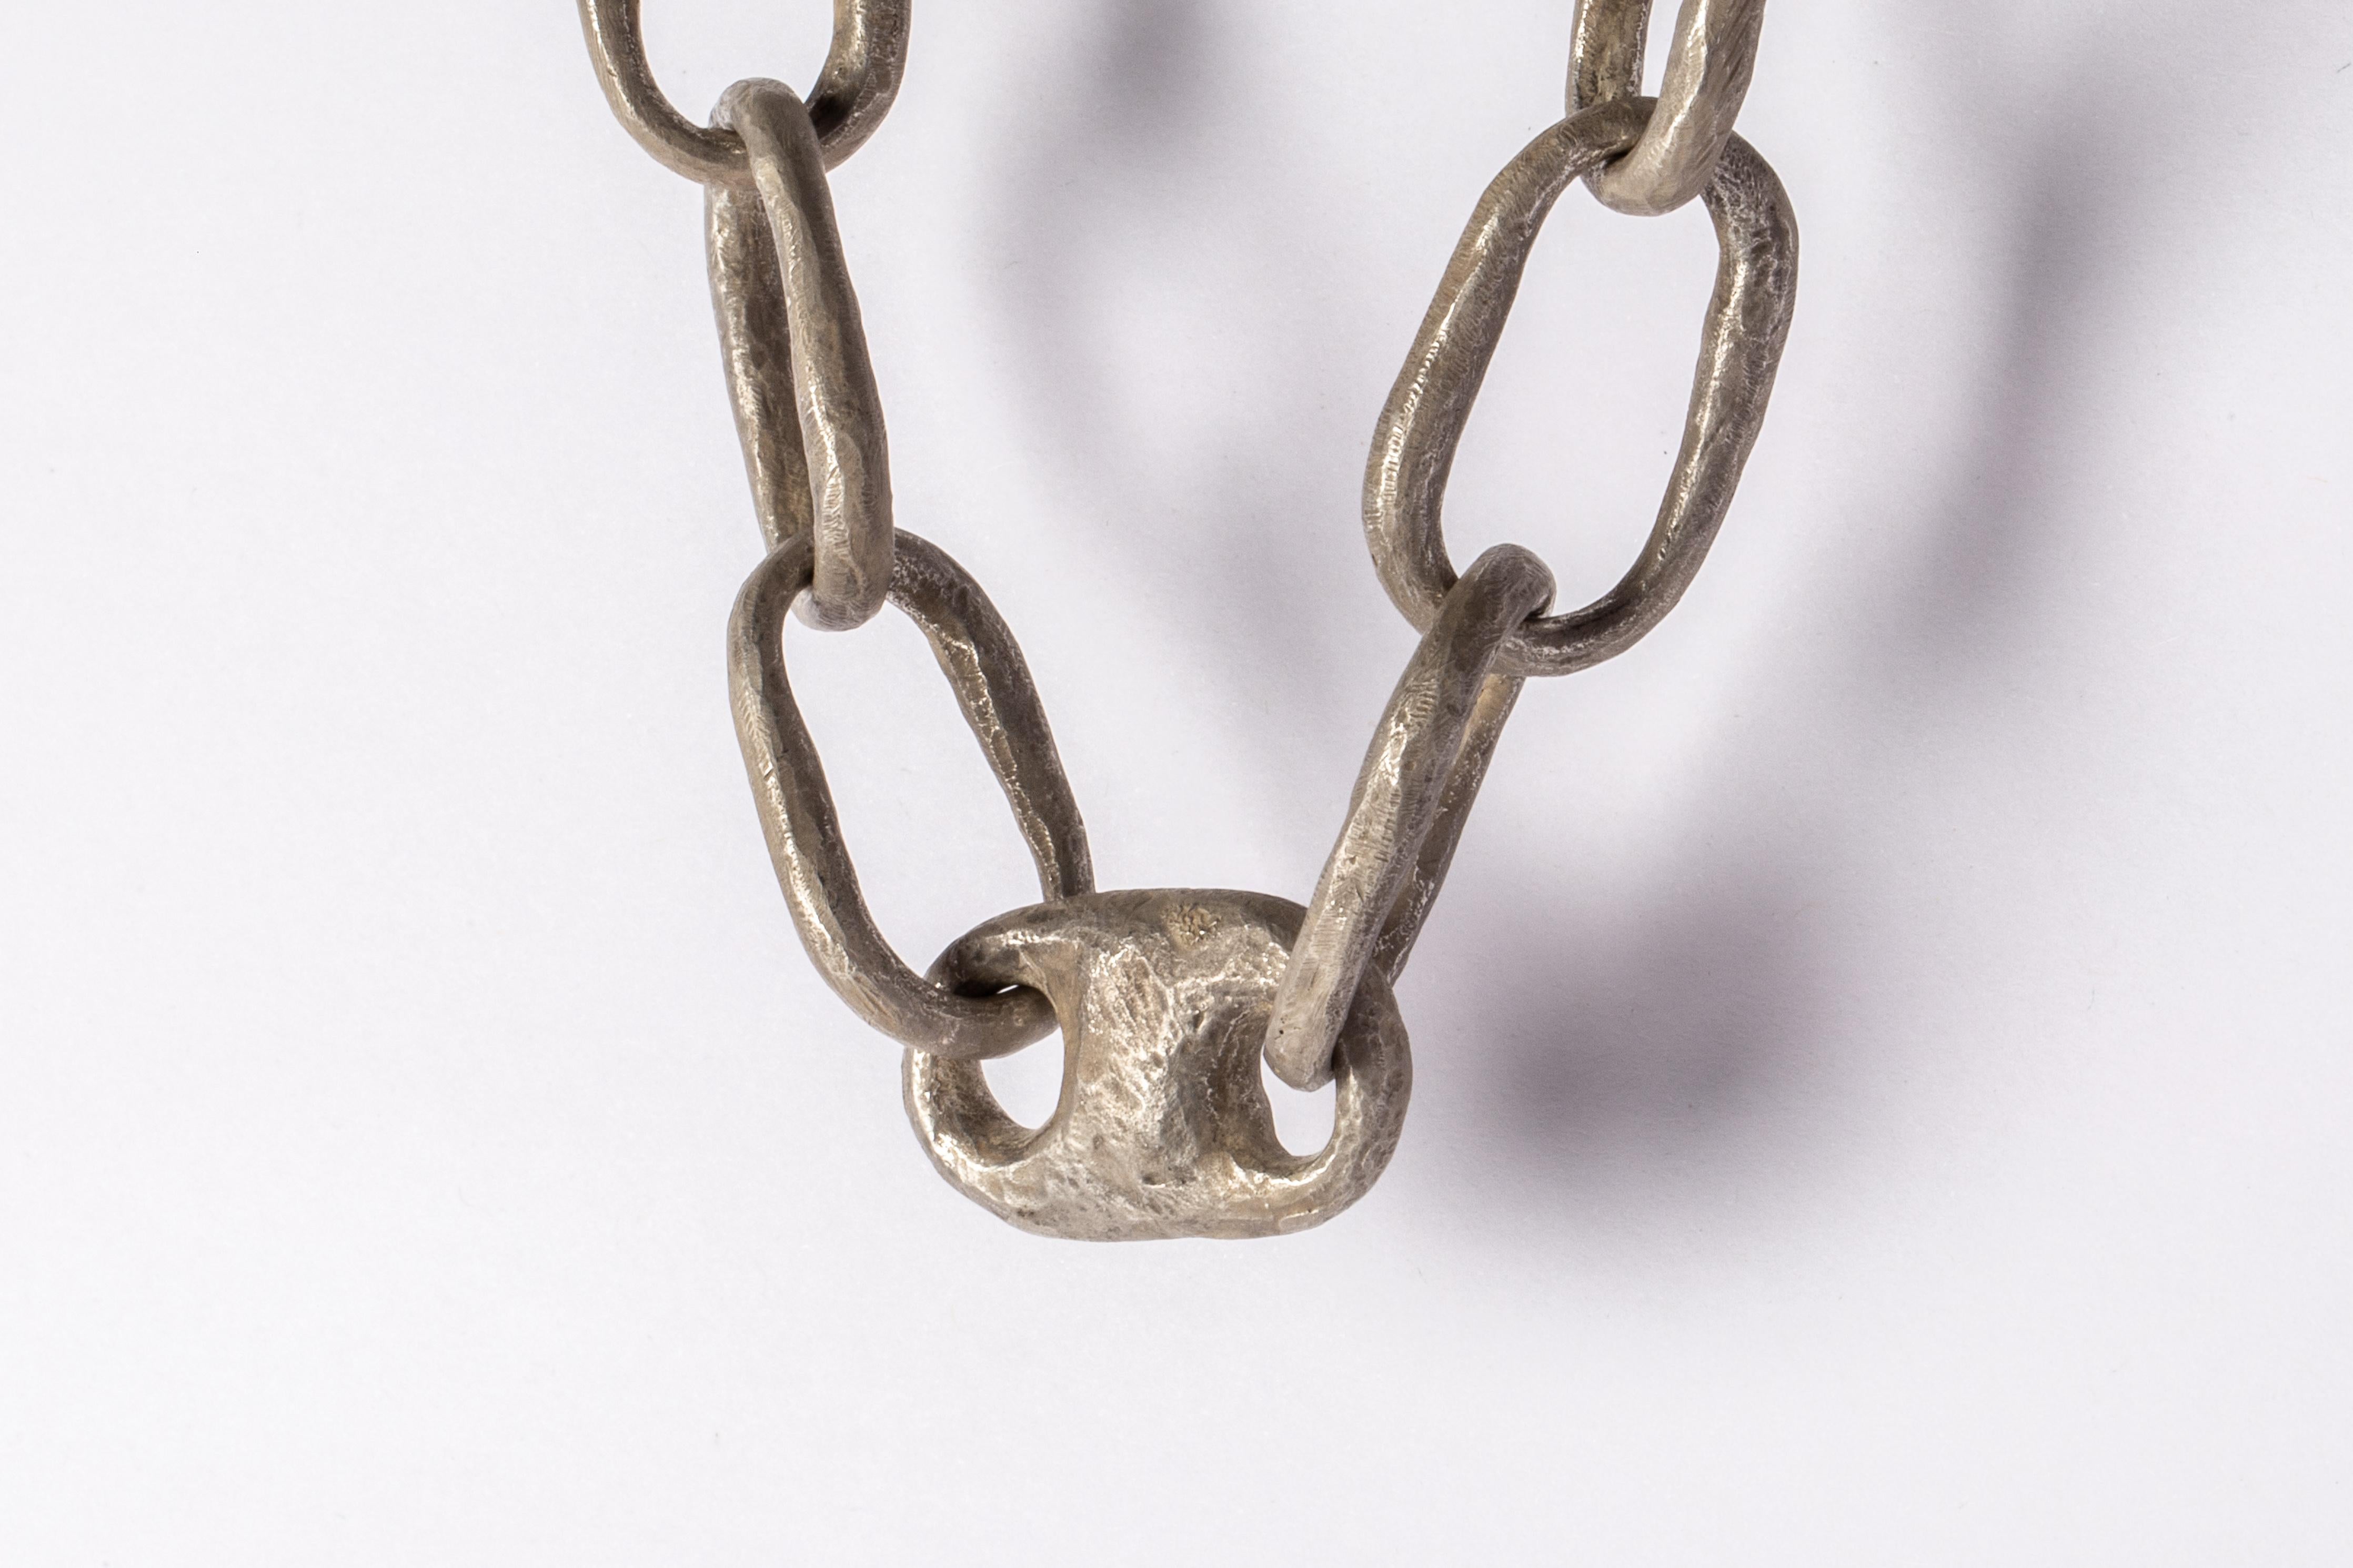 Roman Small Link Necklace w/ Small Closed Link (45cm, DA) For Sale 2